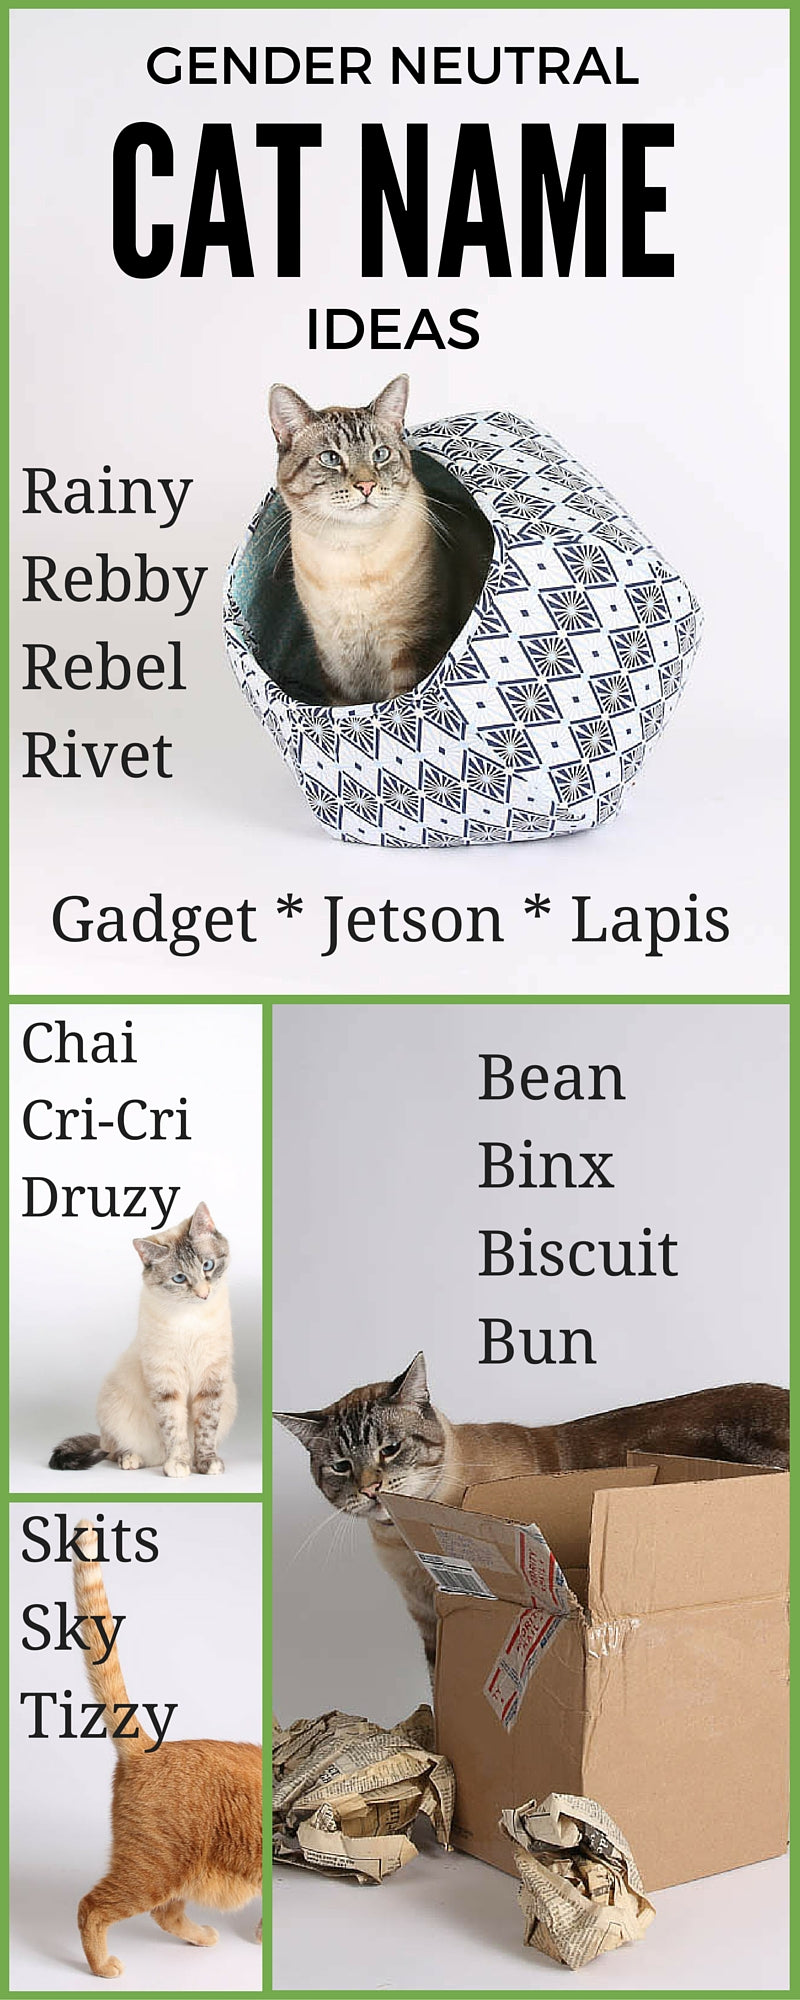 Ideas for gender neutral cat names